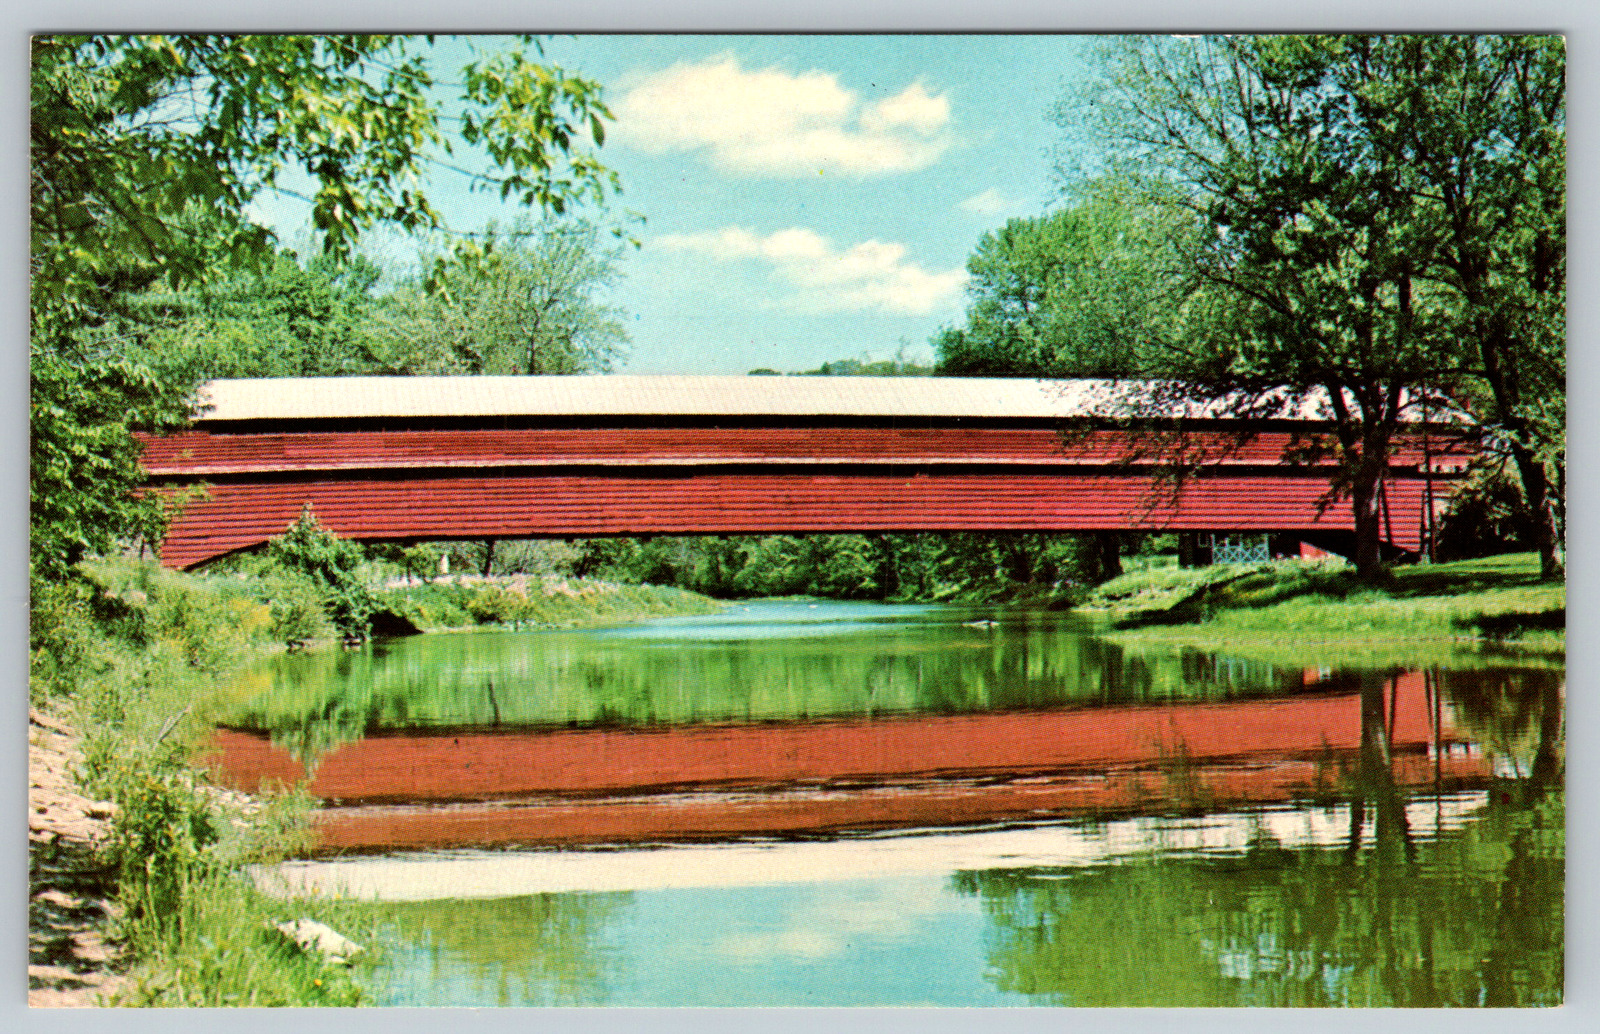 Pennsylvania Station Bridge Dreibelbis Station Covered Chrome Vintage Postcard